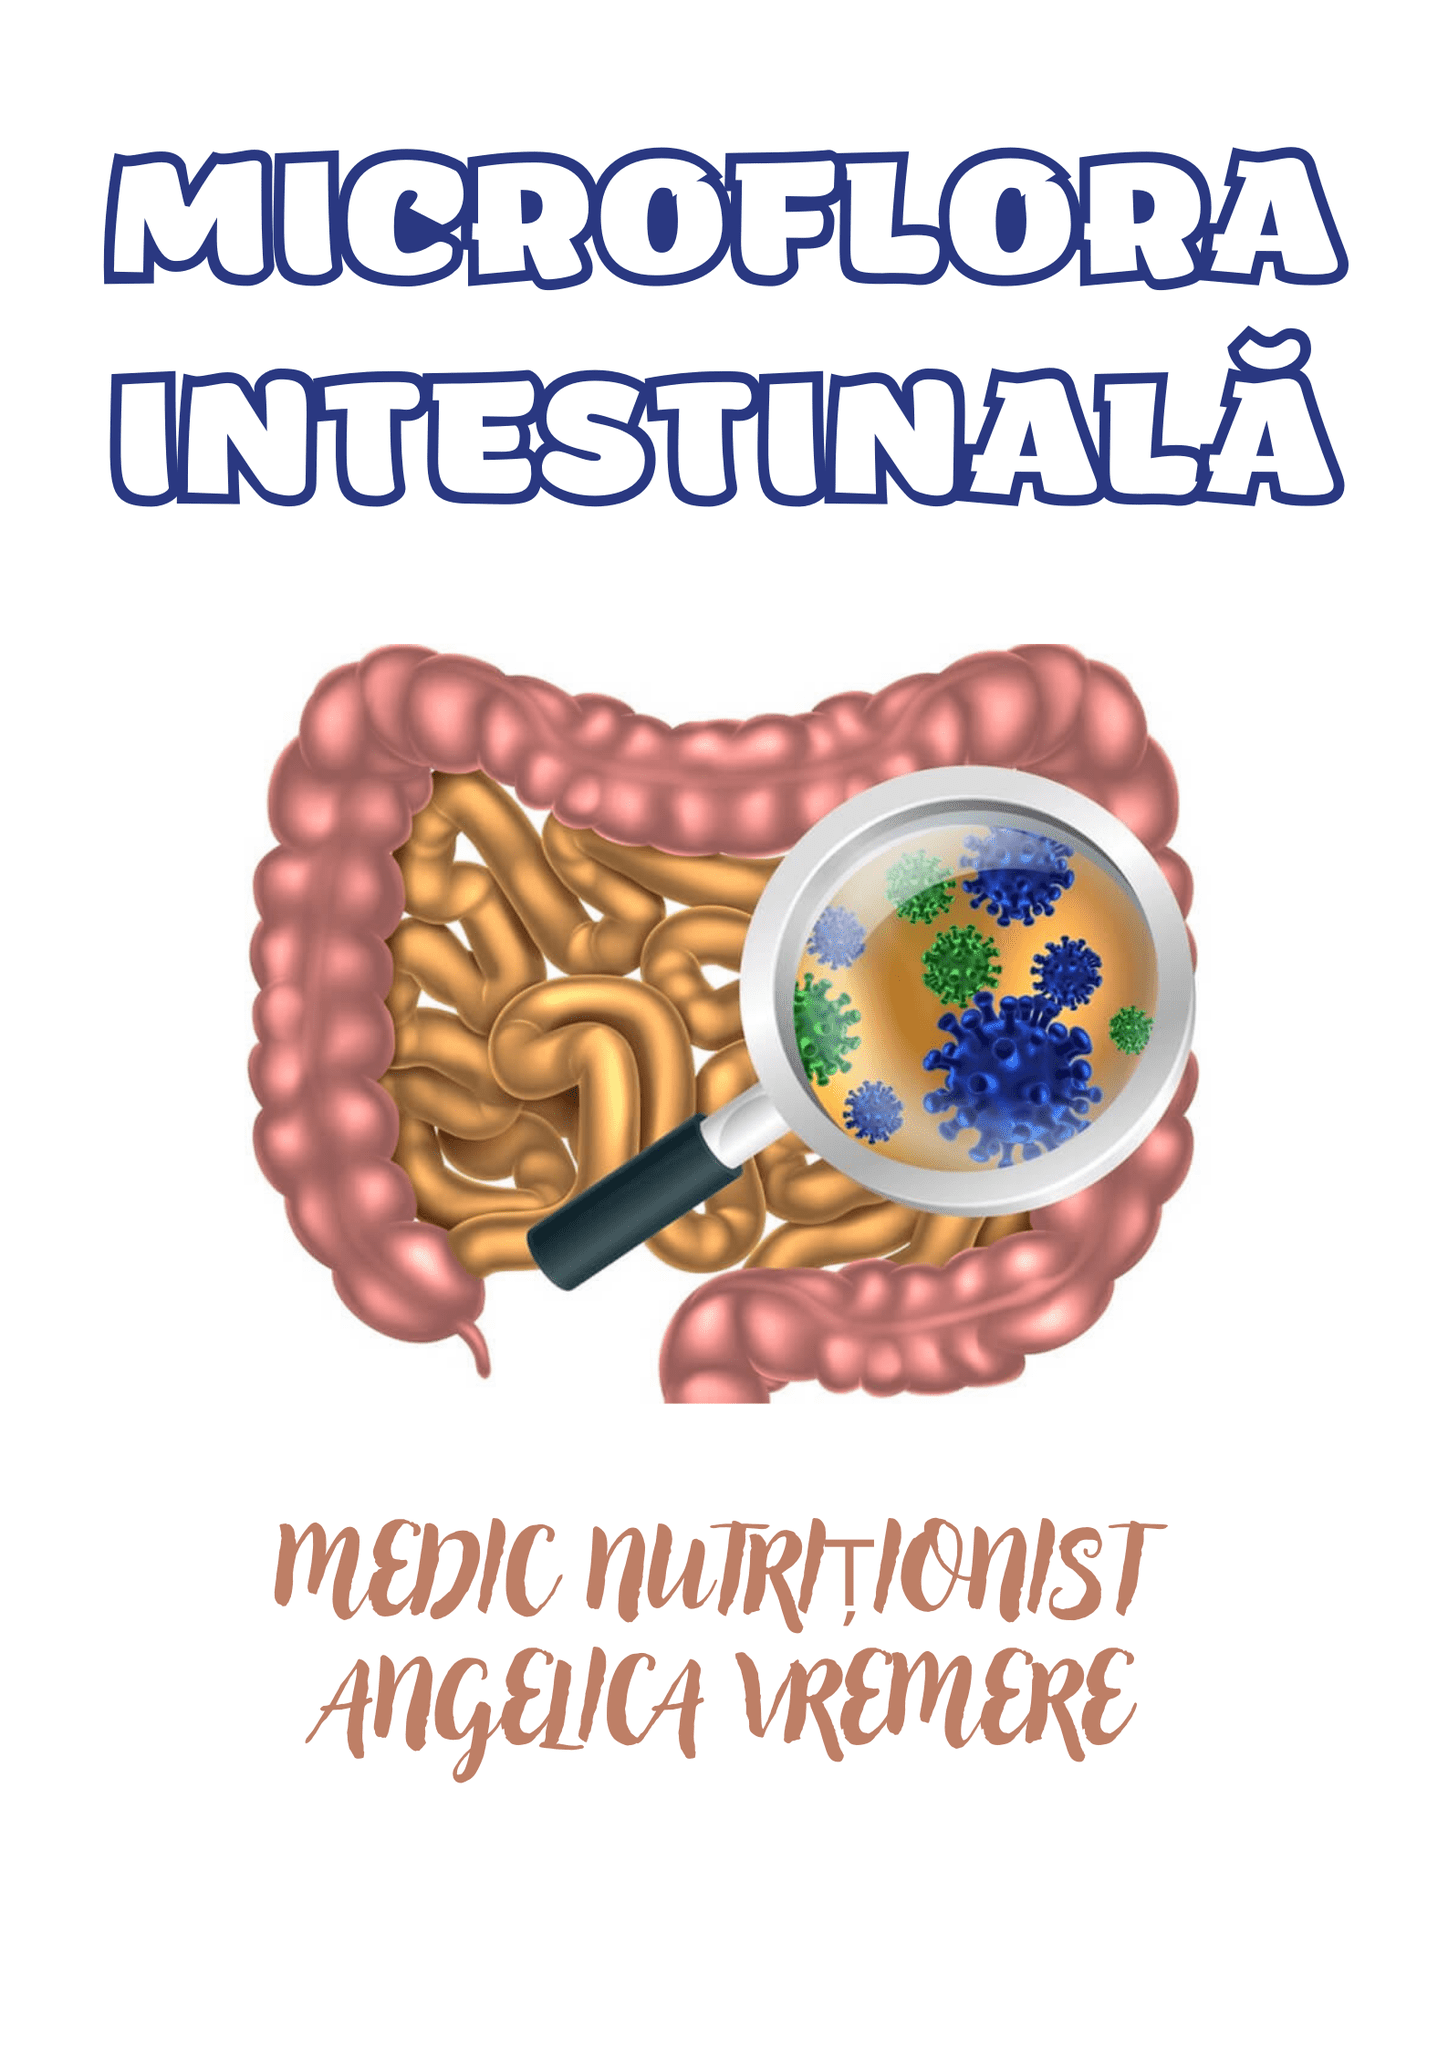 microflora intestinala